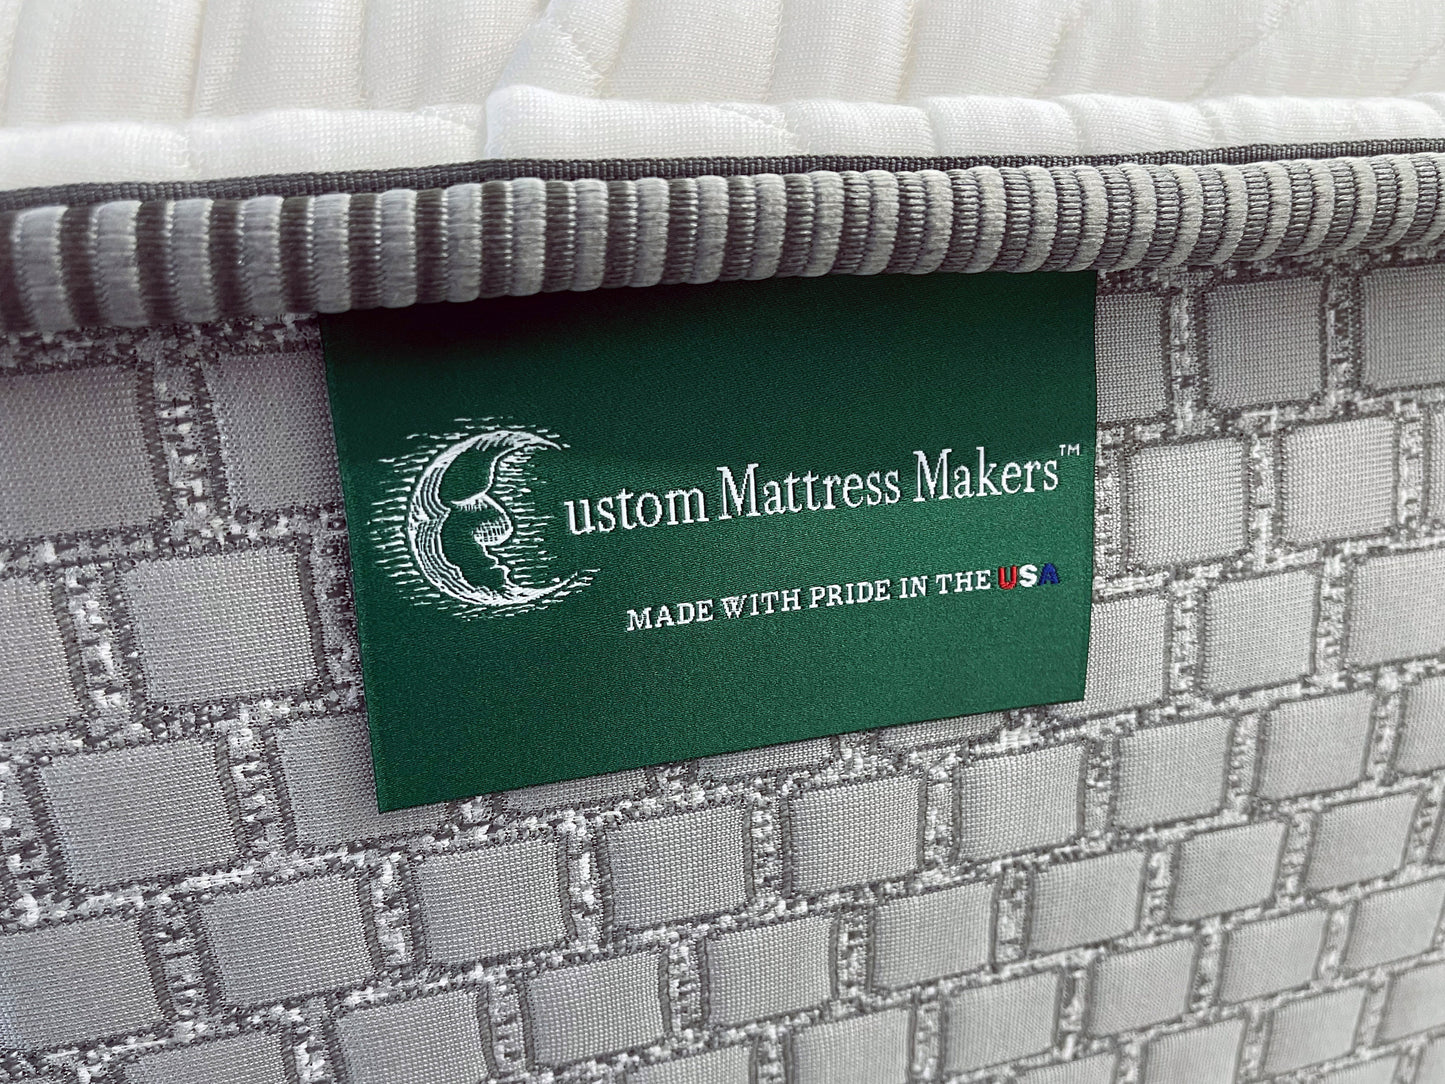 Daytona - Firm, custom mattress